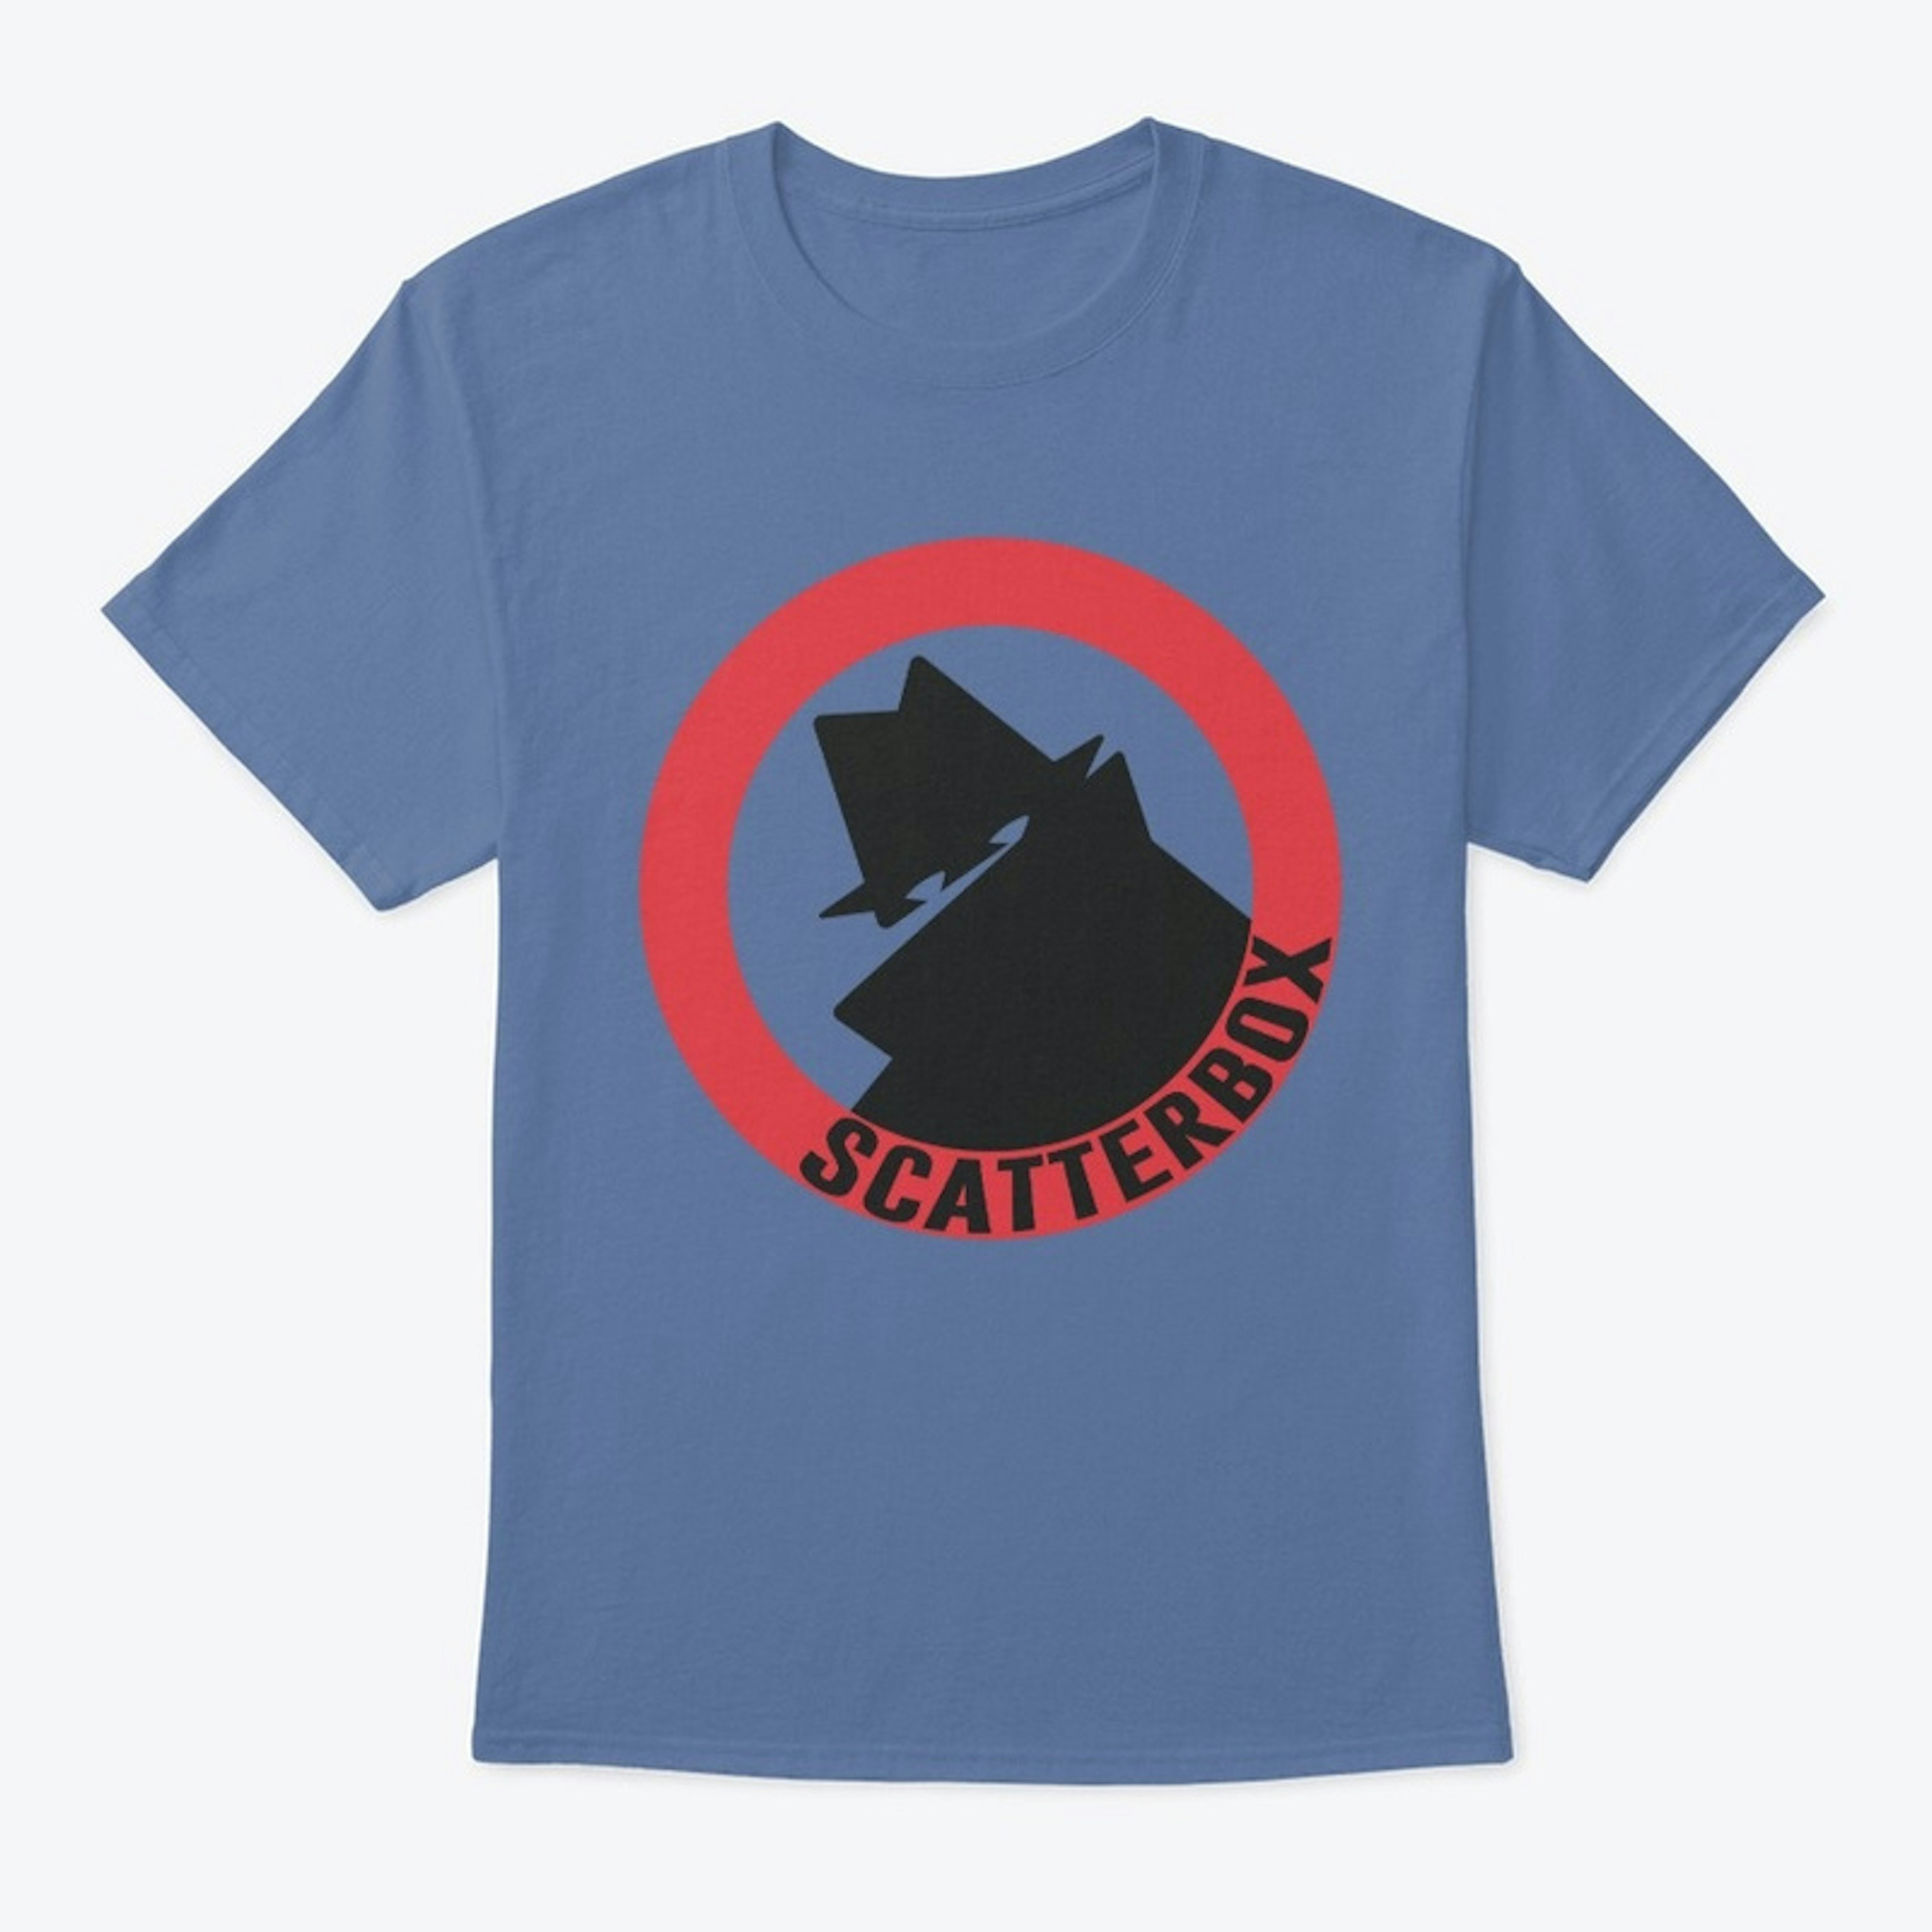 Scatterbox "My Hood" T-Shirt